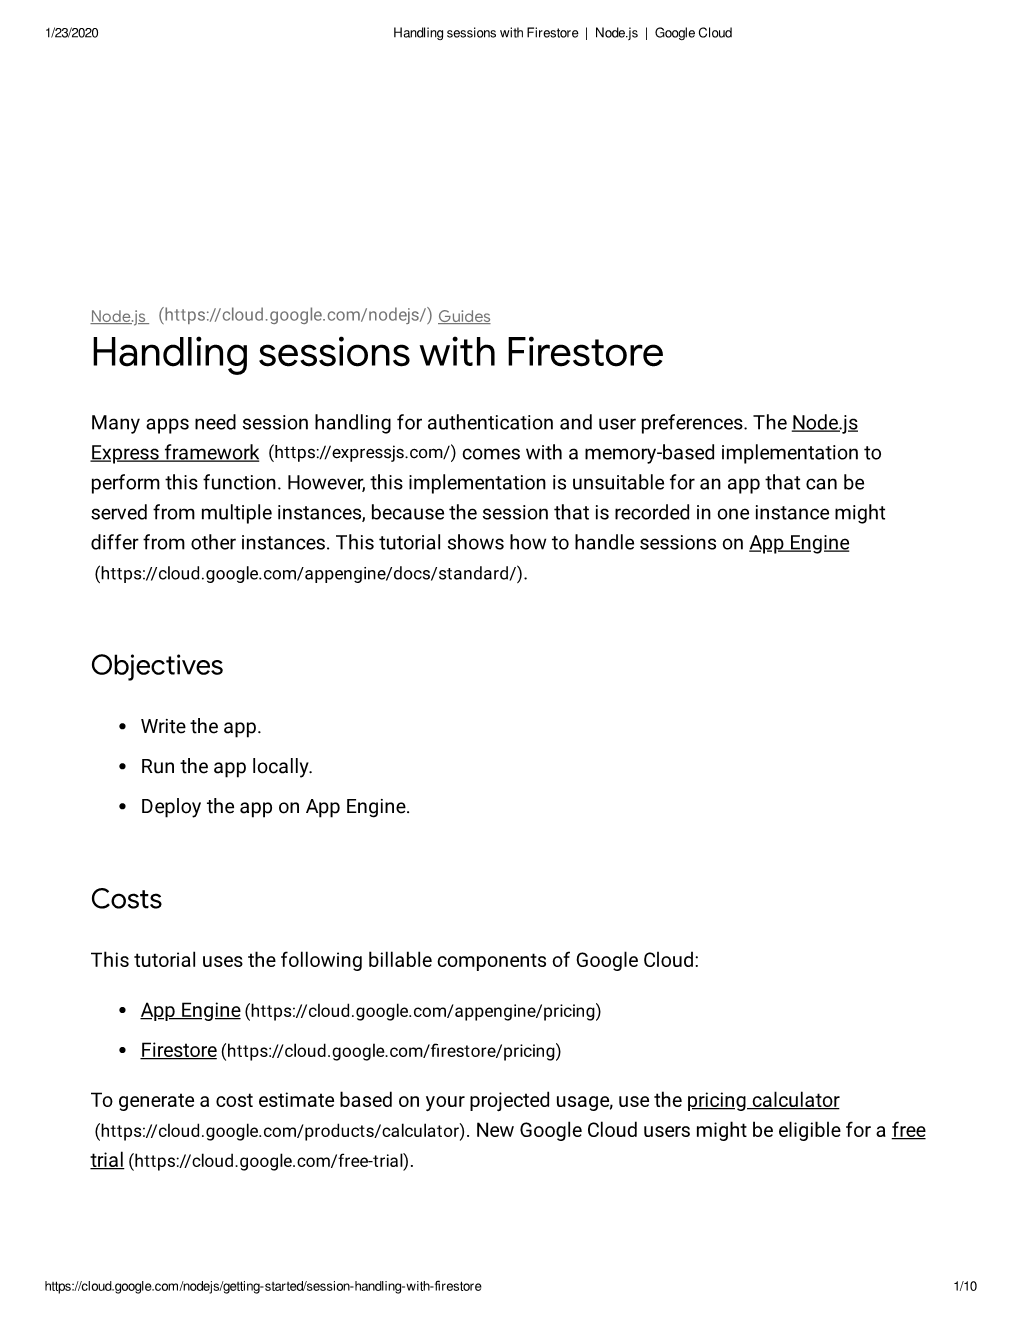 Handling Sessions with Firestore | Node.Js | Google Cloud